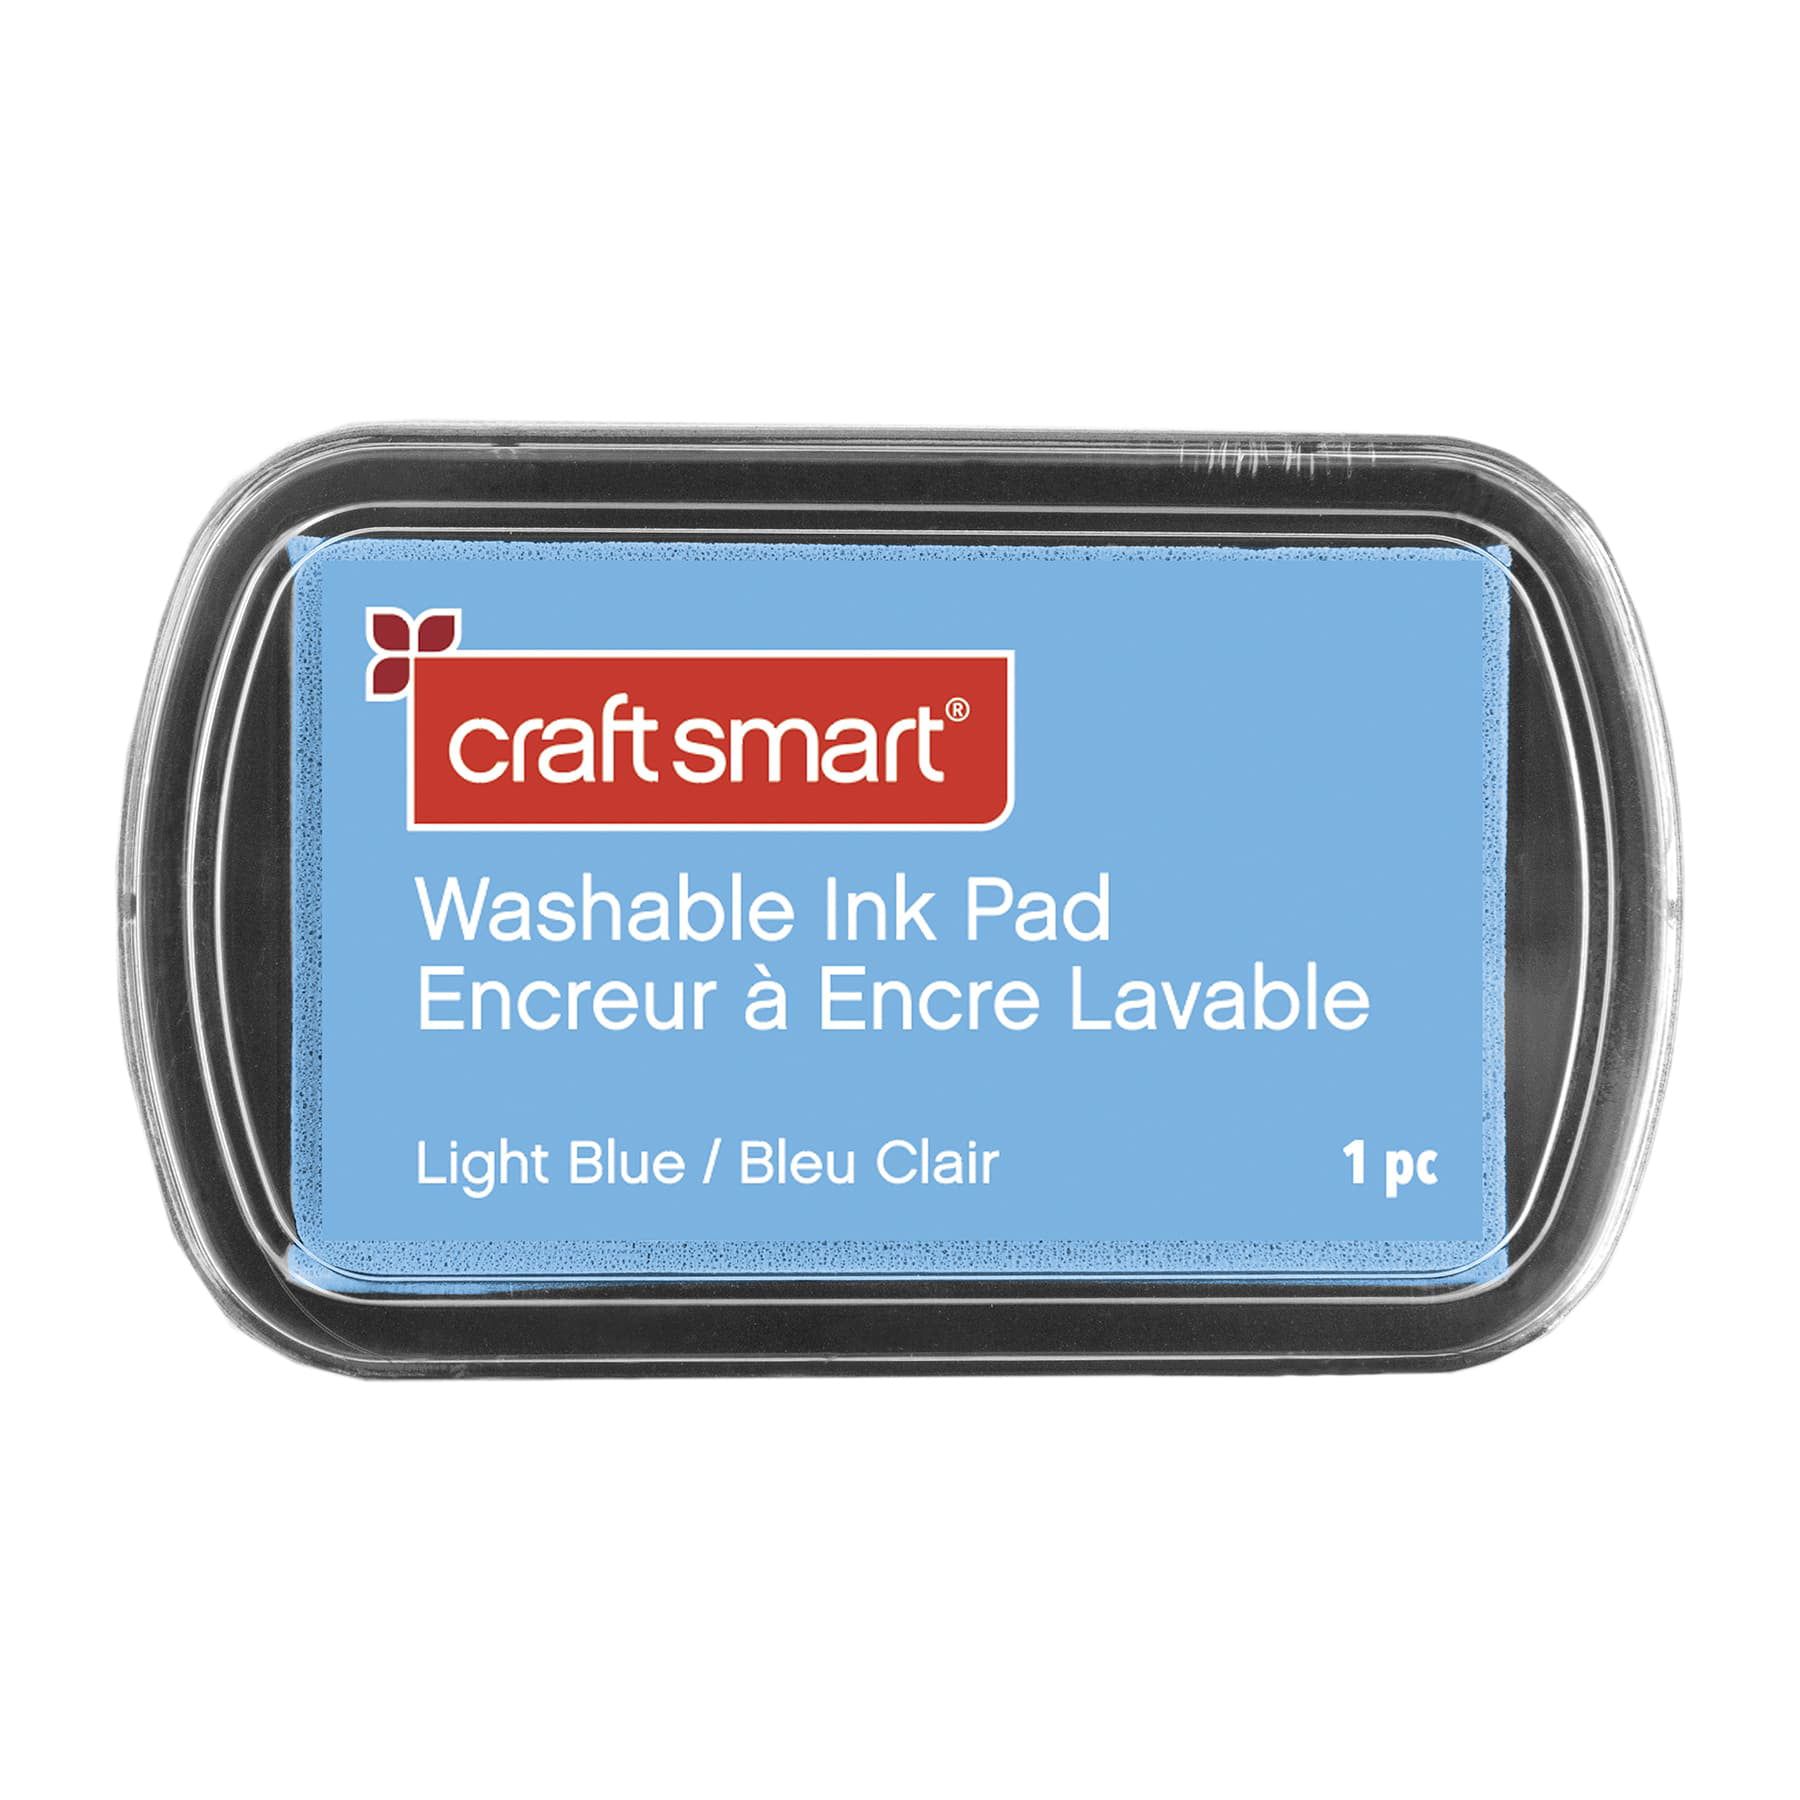 Buy Color Splash!® Washable Color Ink Pads (Pack of 12) at S&S